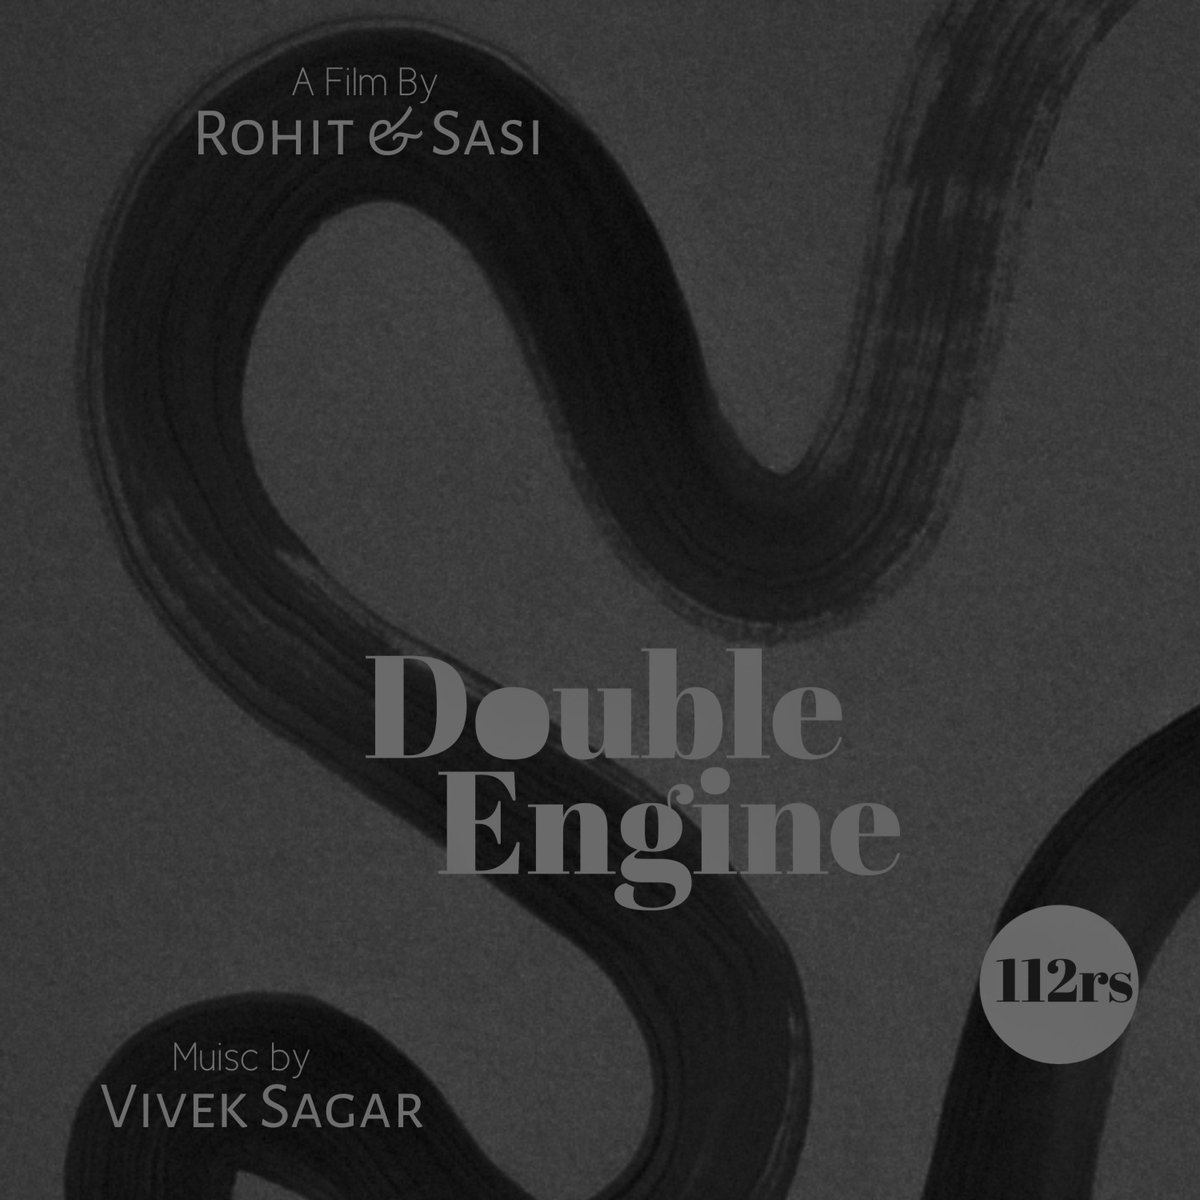 Double Engine in Monochrome 🐍
#DoubleEngineOnJan5th